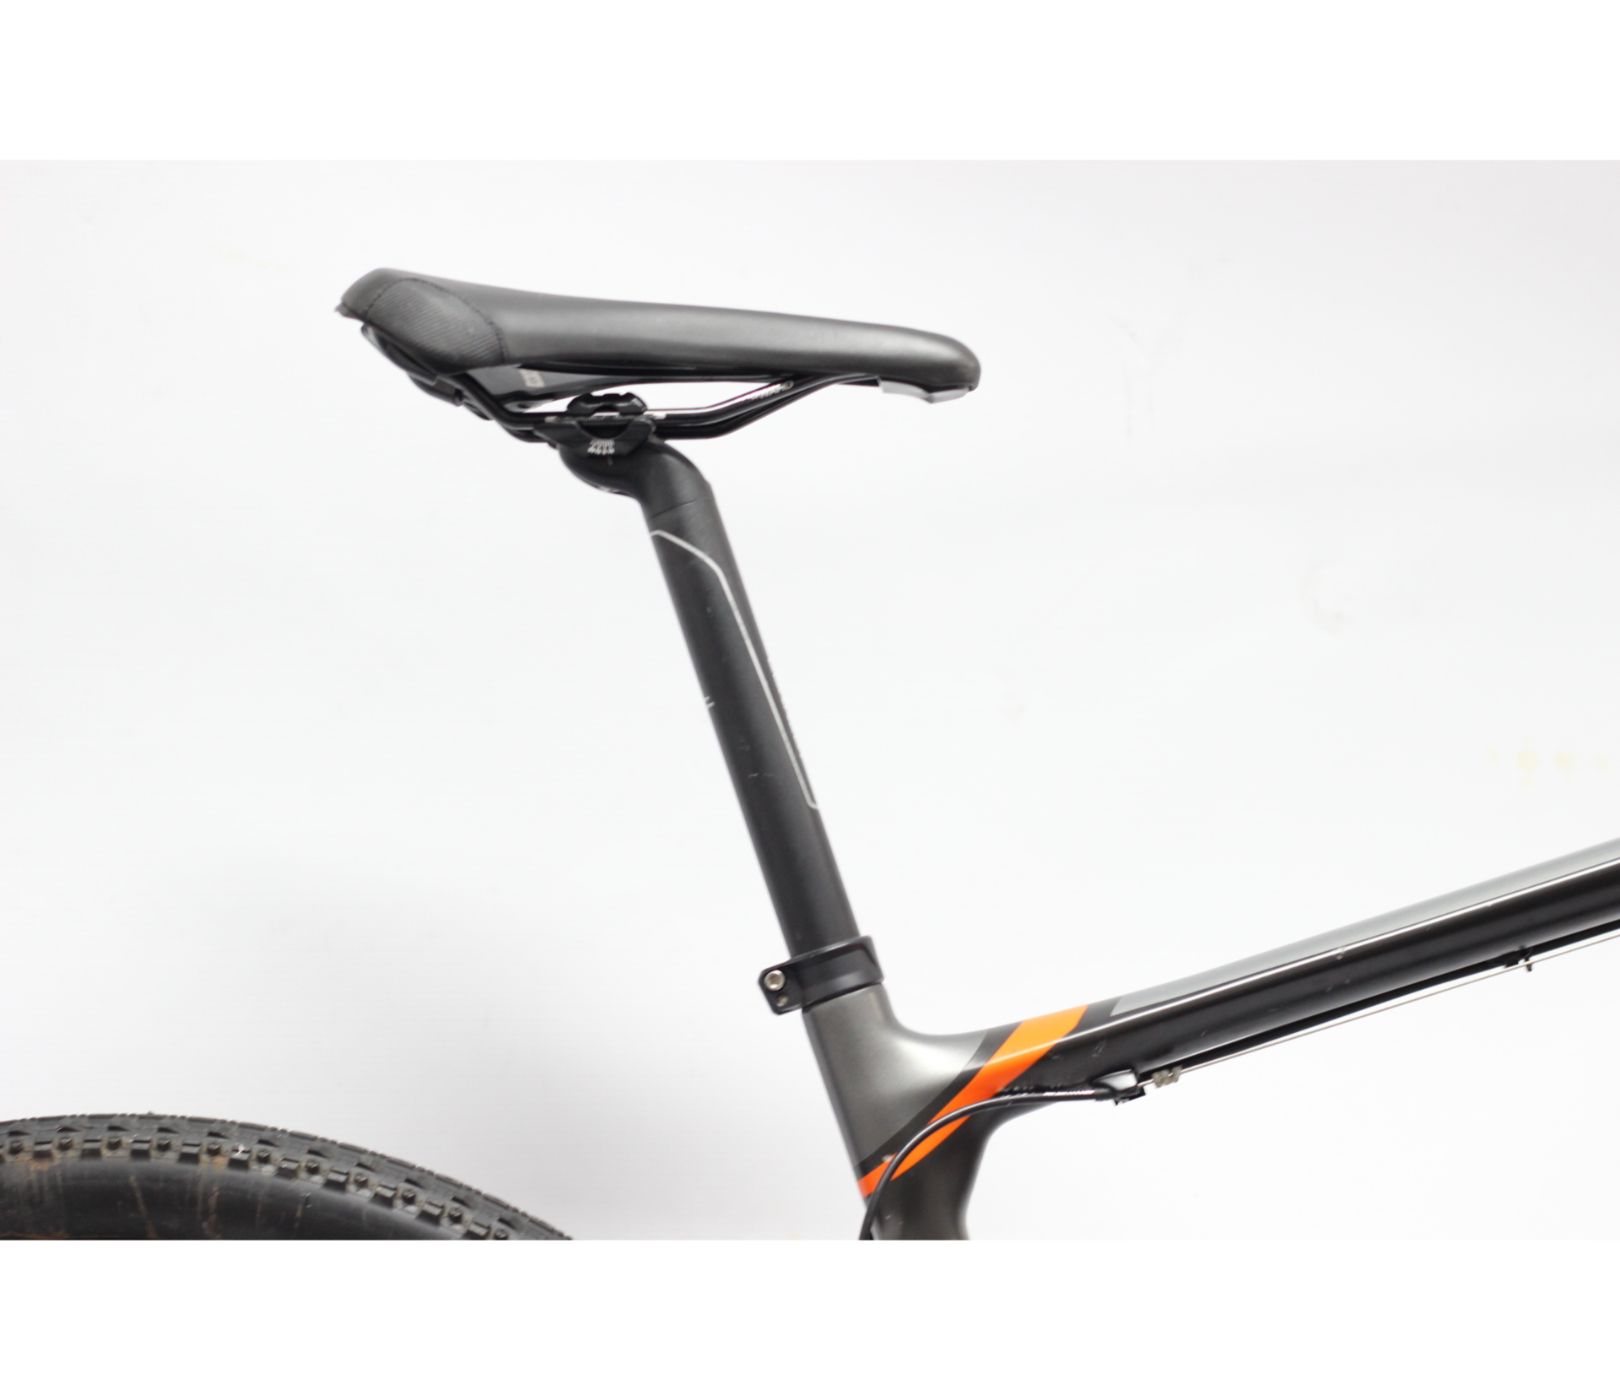 Pre-Owned Giant XRT Advanced Hardtail Carbon Mountain Bike - XL